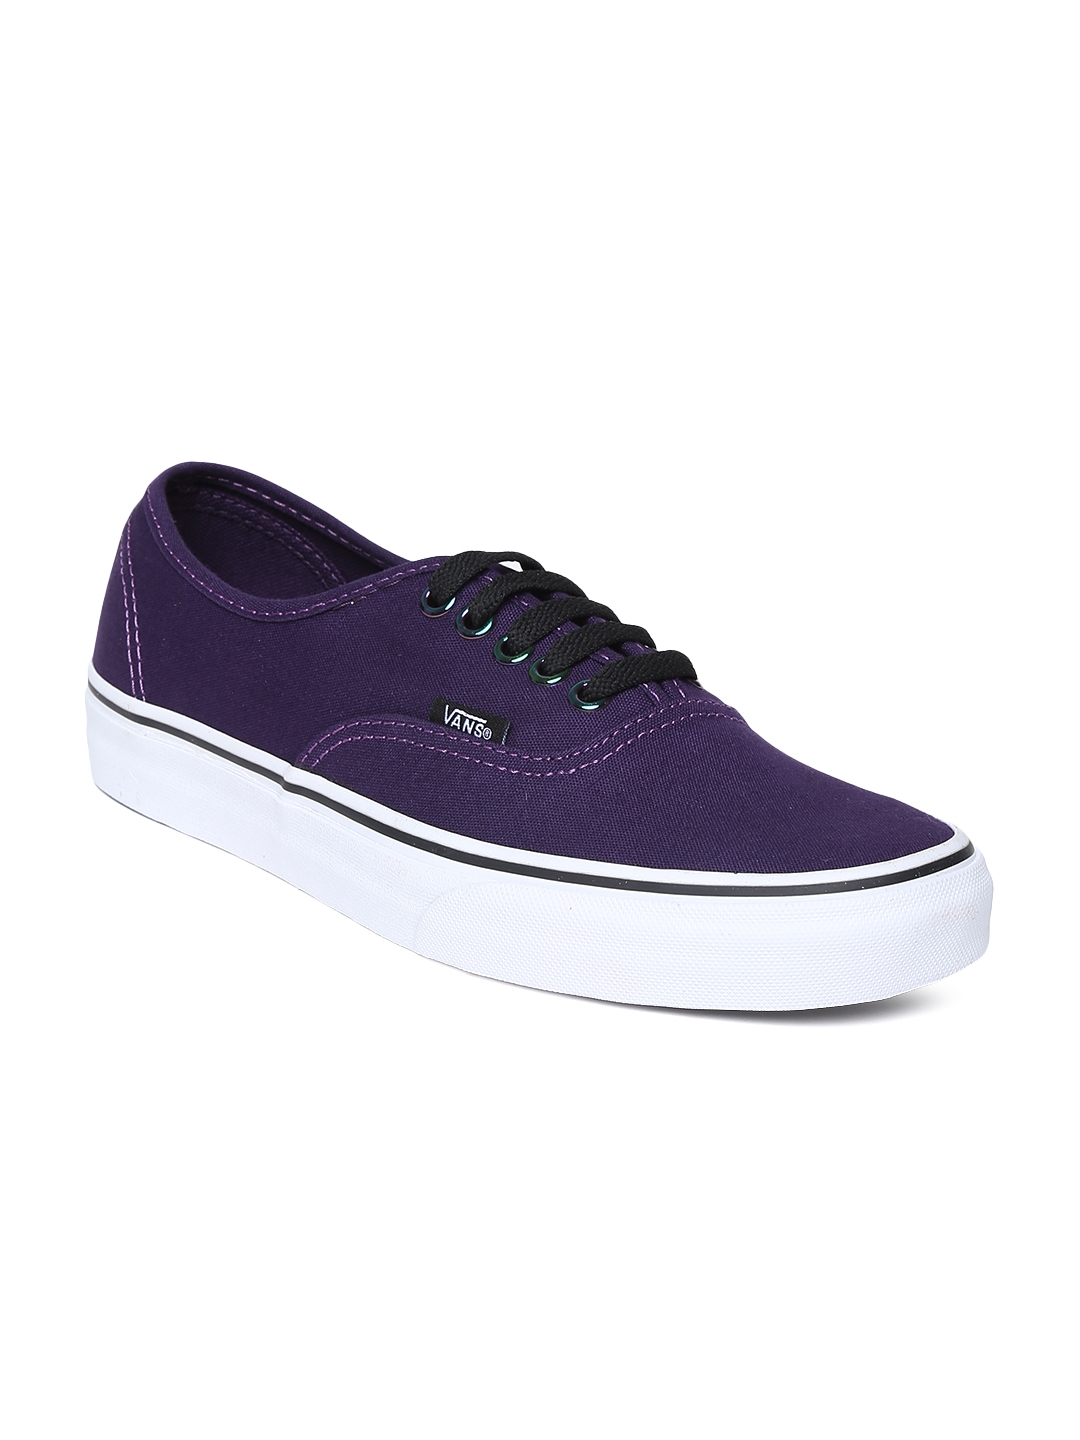 Buy Vans Unisex Purple Authentic Canvas Sneakers - Casual Shoes for